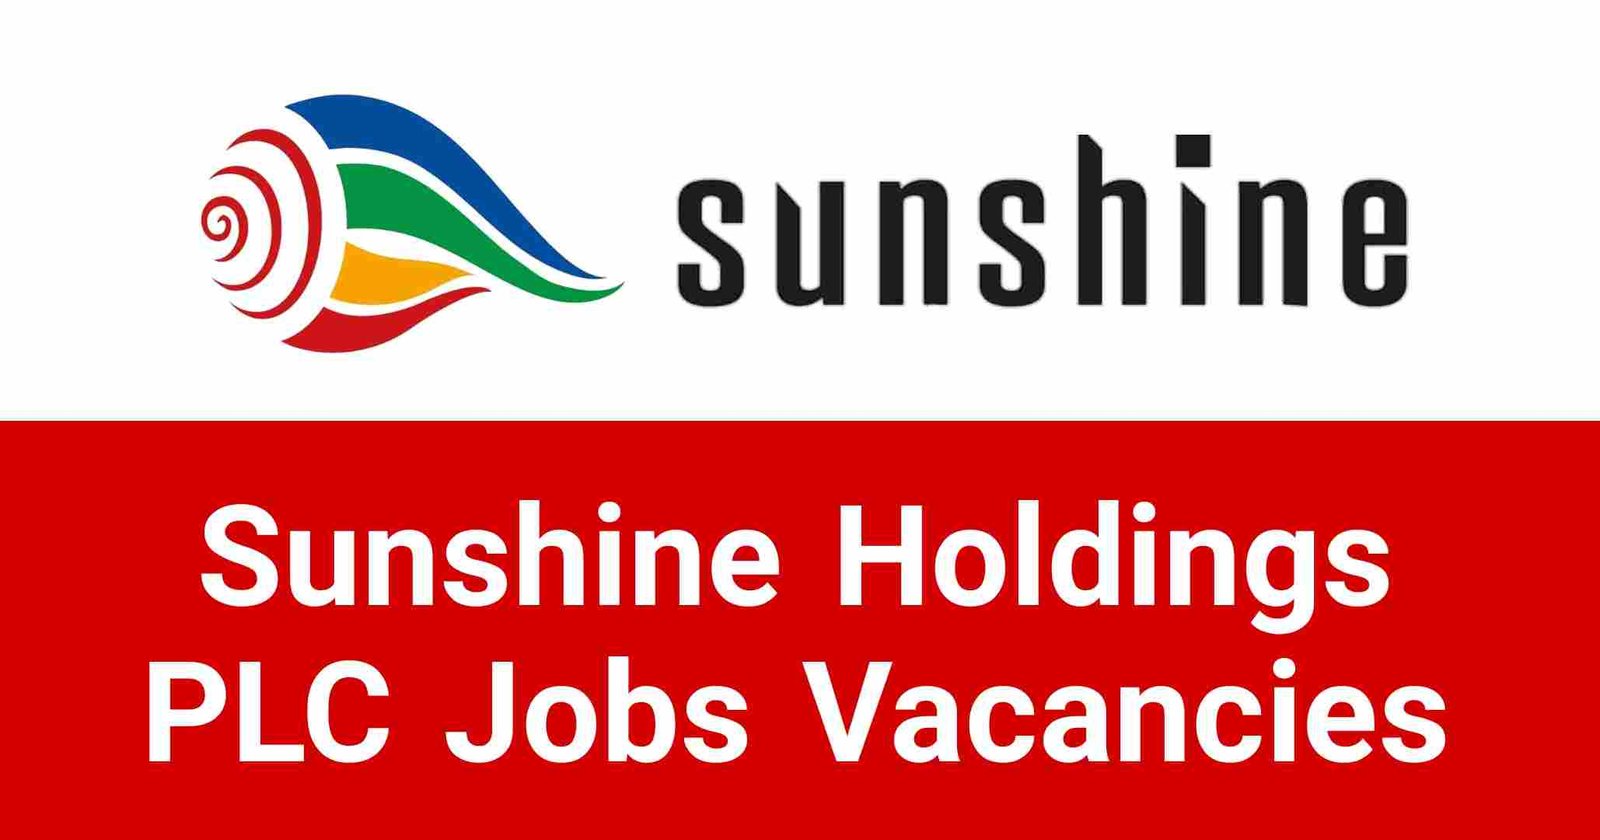 Sunshine Holdings PLC Jobs Vacancies